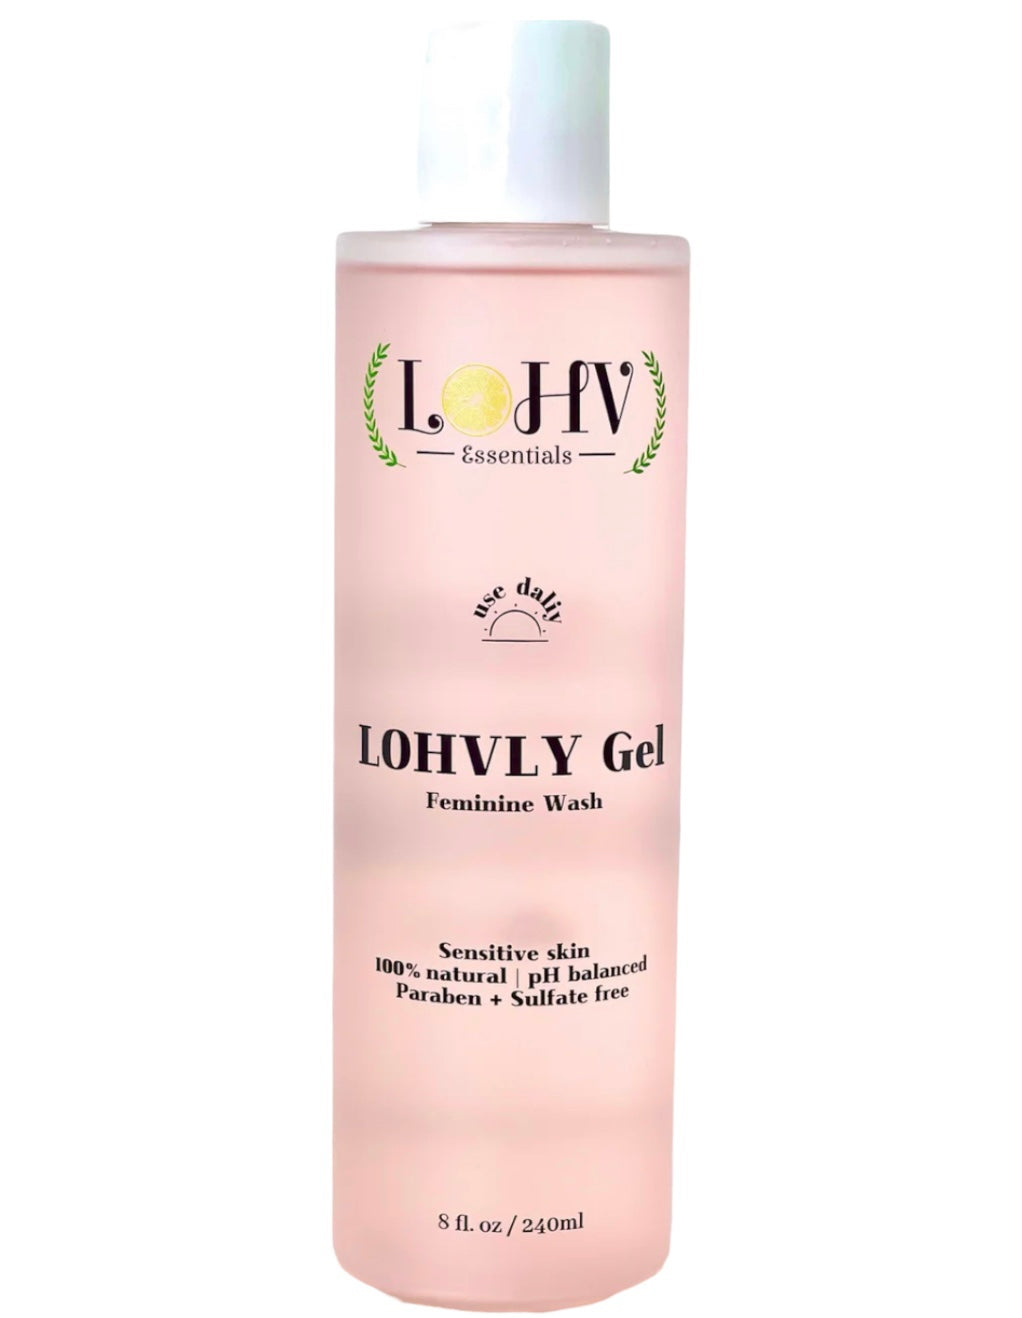 3 Step Kit To A Healthy Clean Yoni: YONI GEL feminine wash+ LOHVLY GEL libido boost wash + LOHVLY ROSE OIL